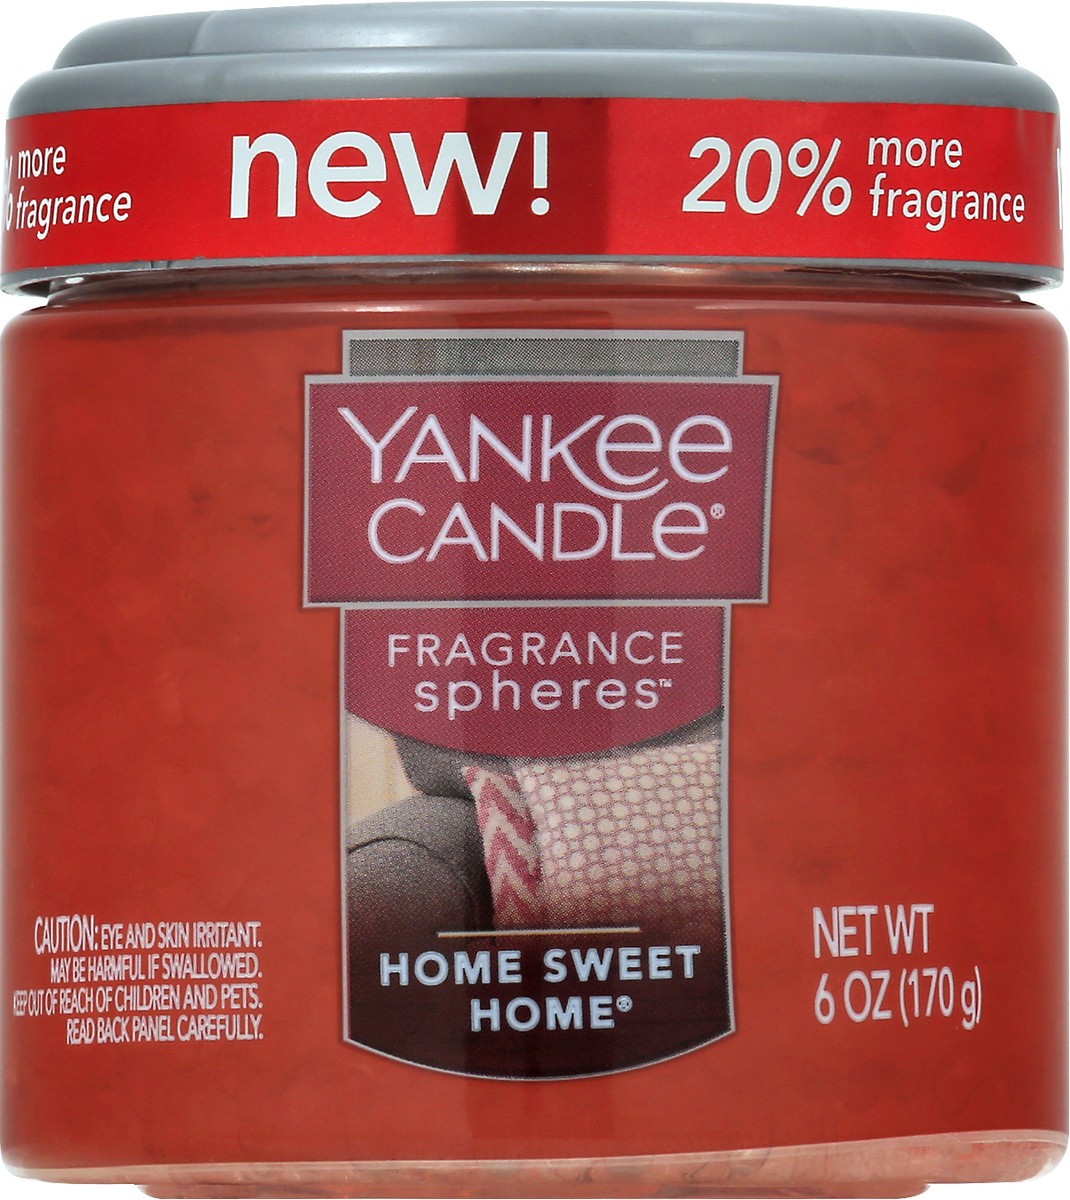 slide 4 of 7, Yankee Candle Home Sweet Home Fragrance Spheres 6 oz, 6 oz